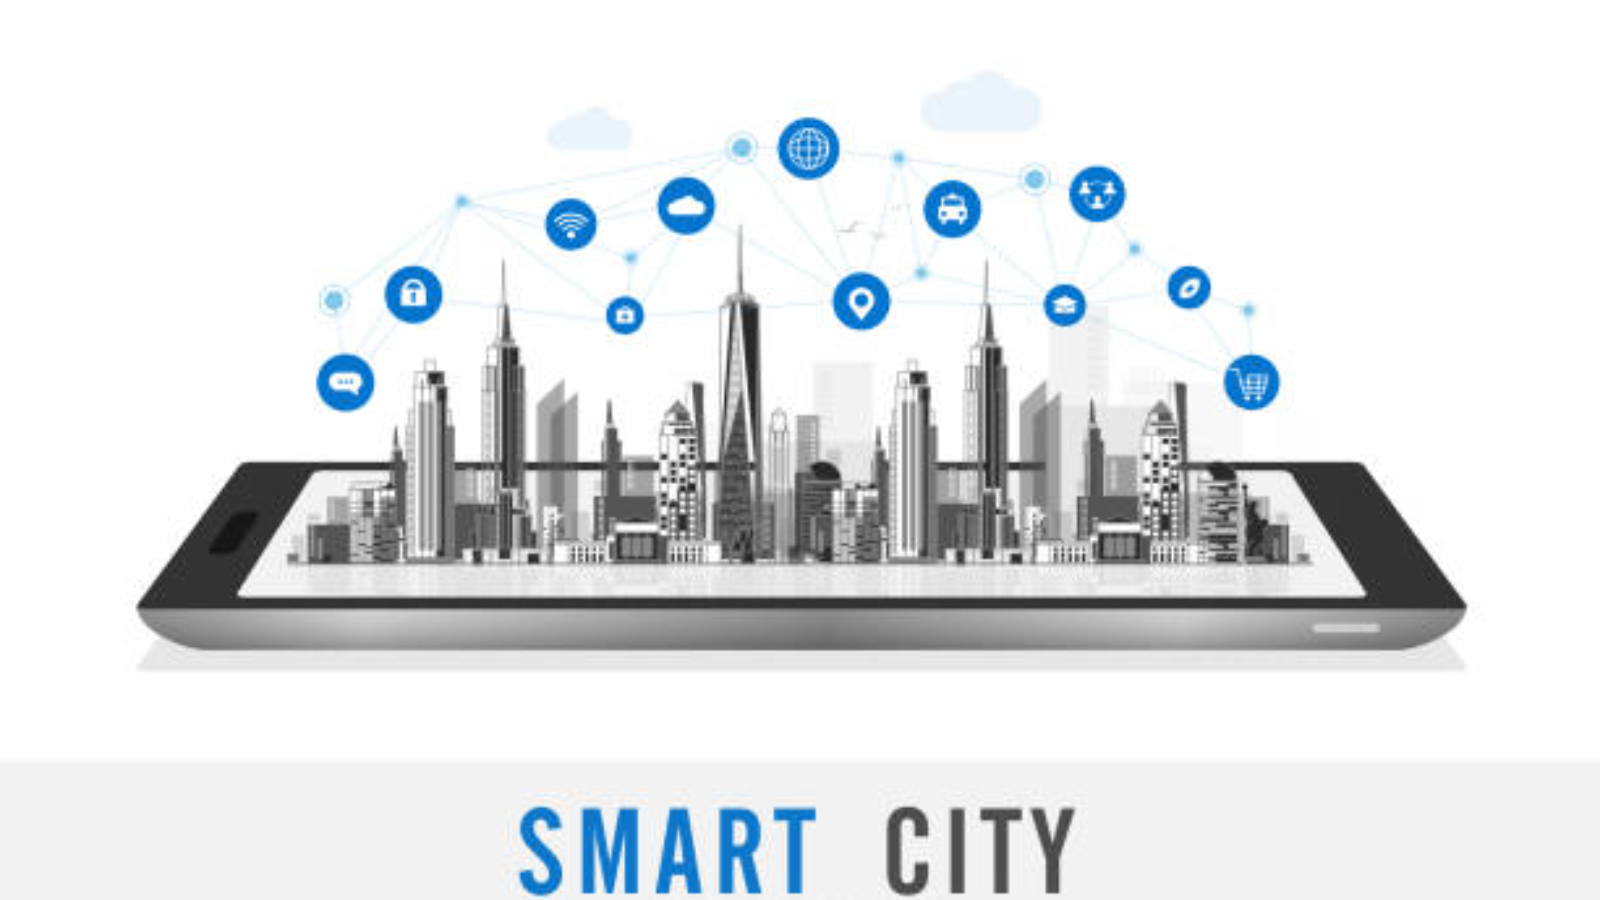 Smart City Framework